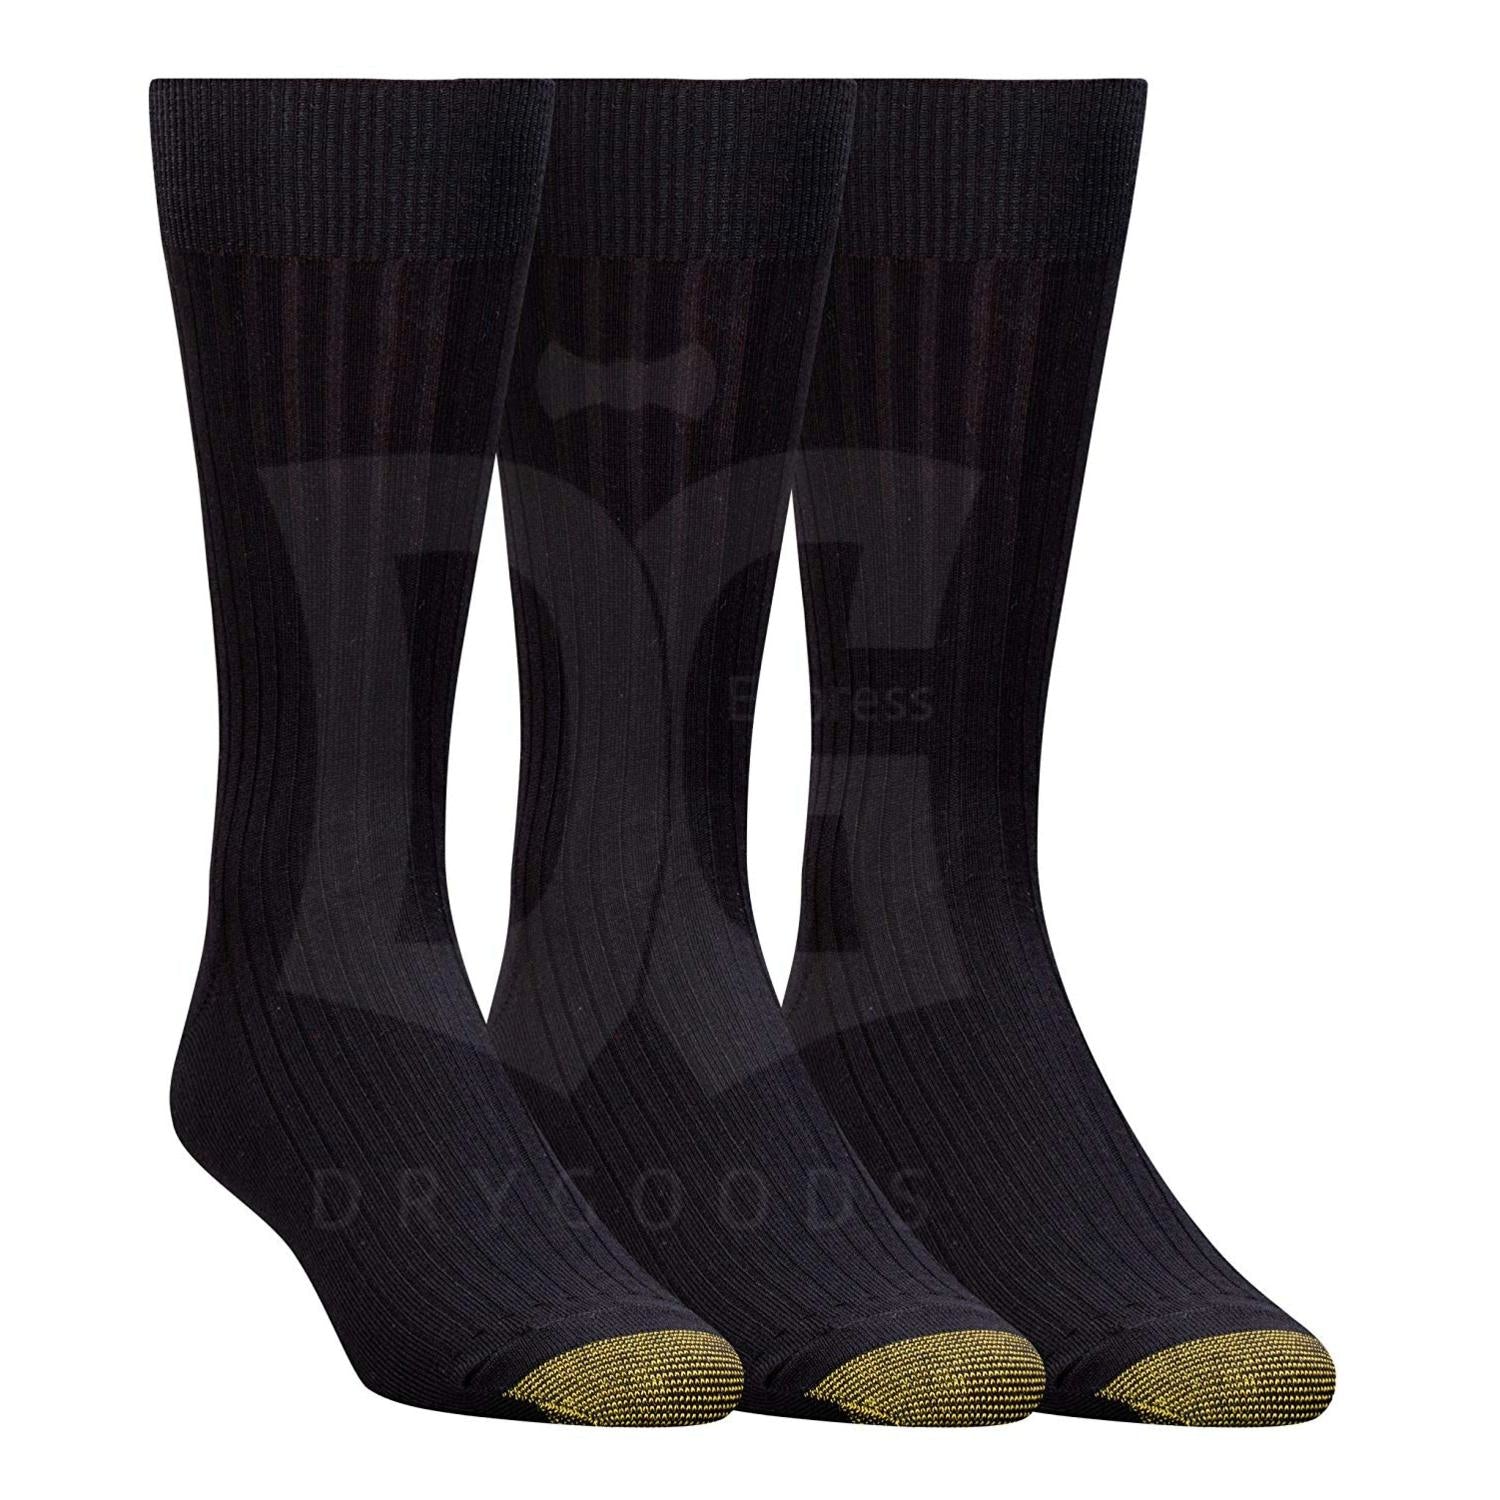 Goldtoe Mens Black Midcalf Socks